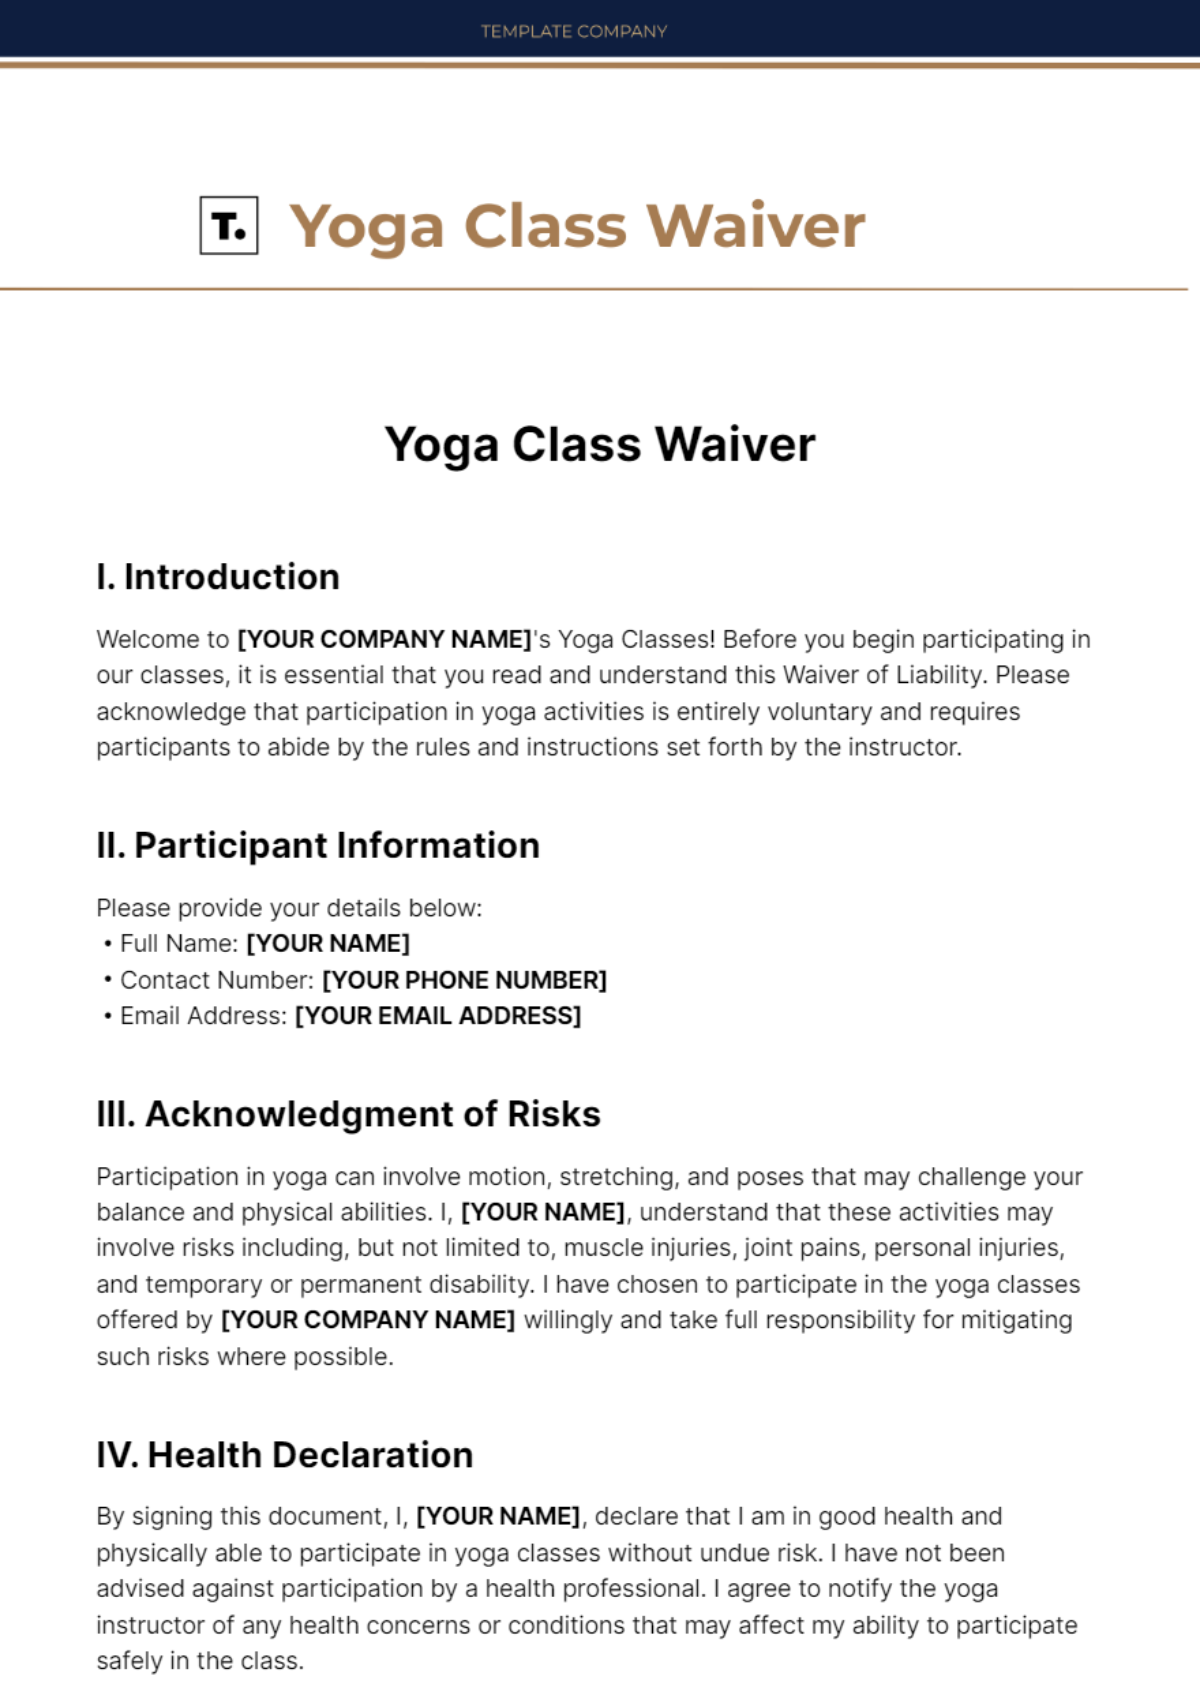 Yoga Class Waiver Template